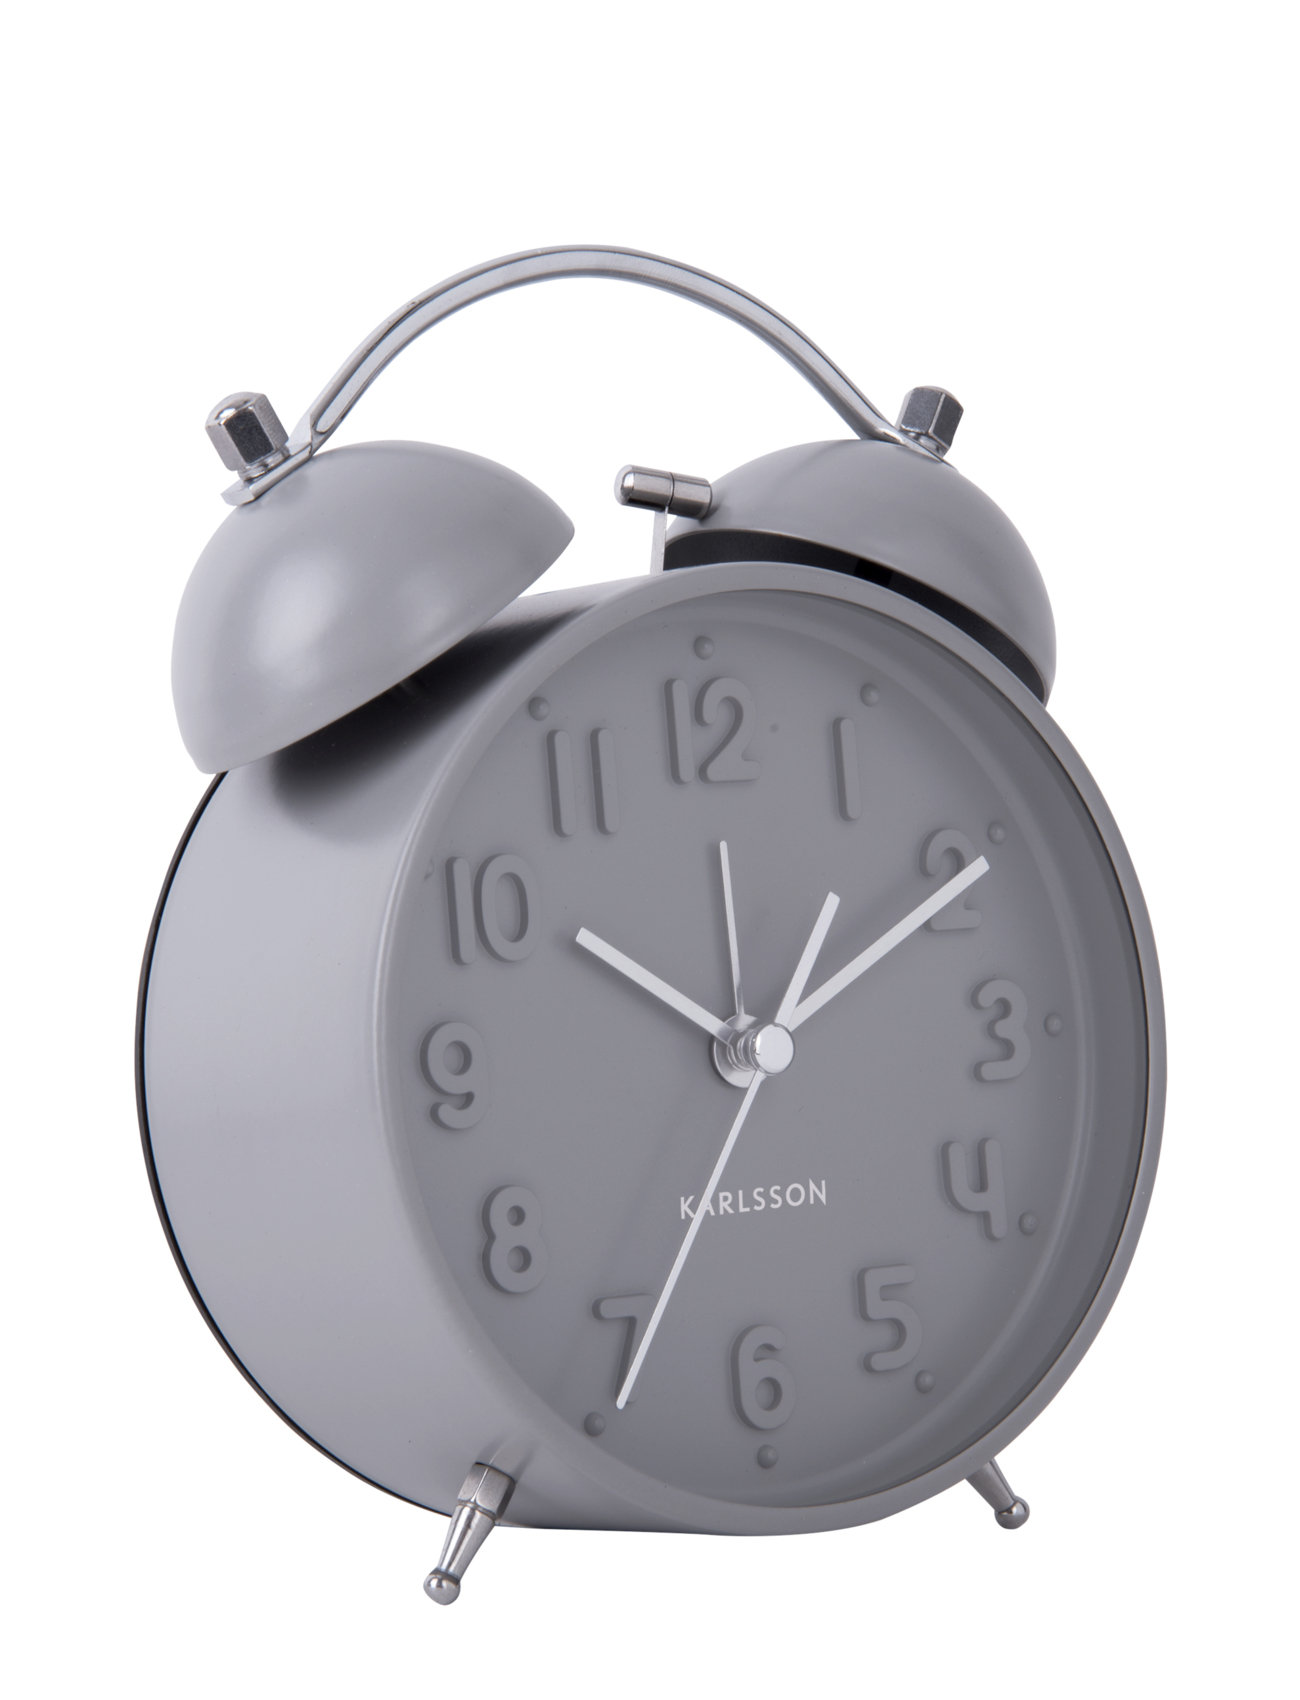 KARLSSON "Alarm Clock Iconic Home Decoration Watches Alarm Clocks Grey KARLSSON"